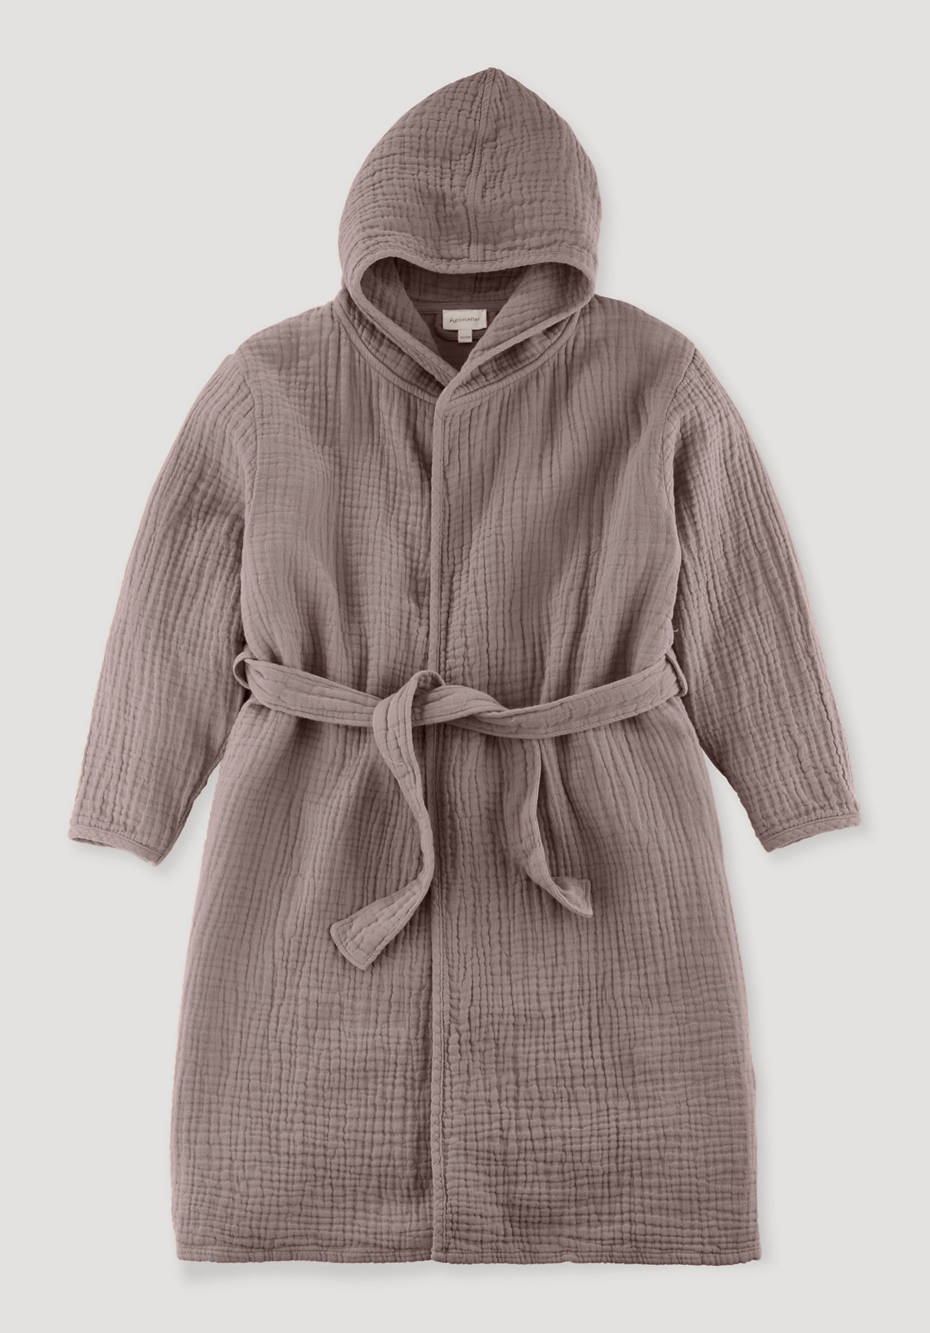 Muslin children's bathrobe made from pure organic cotton